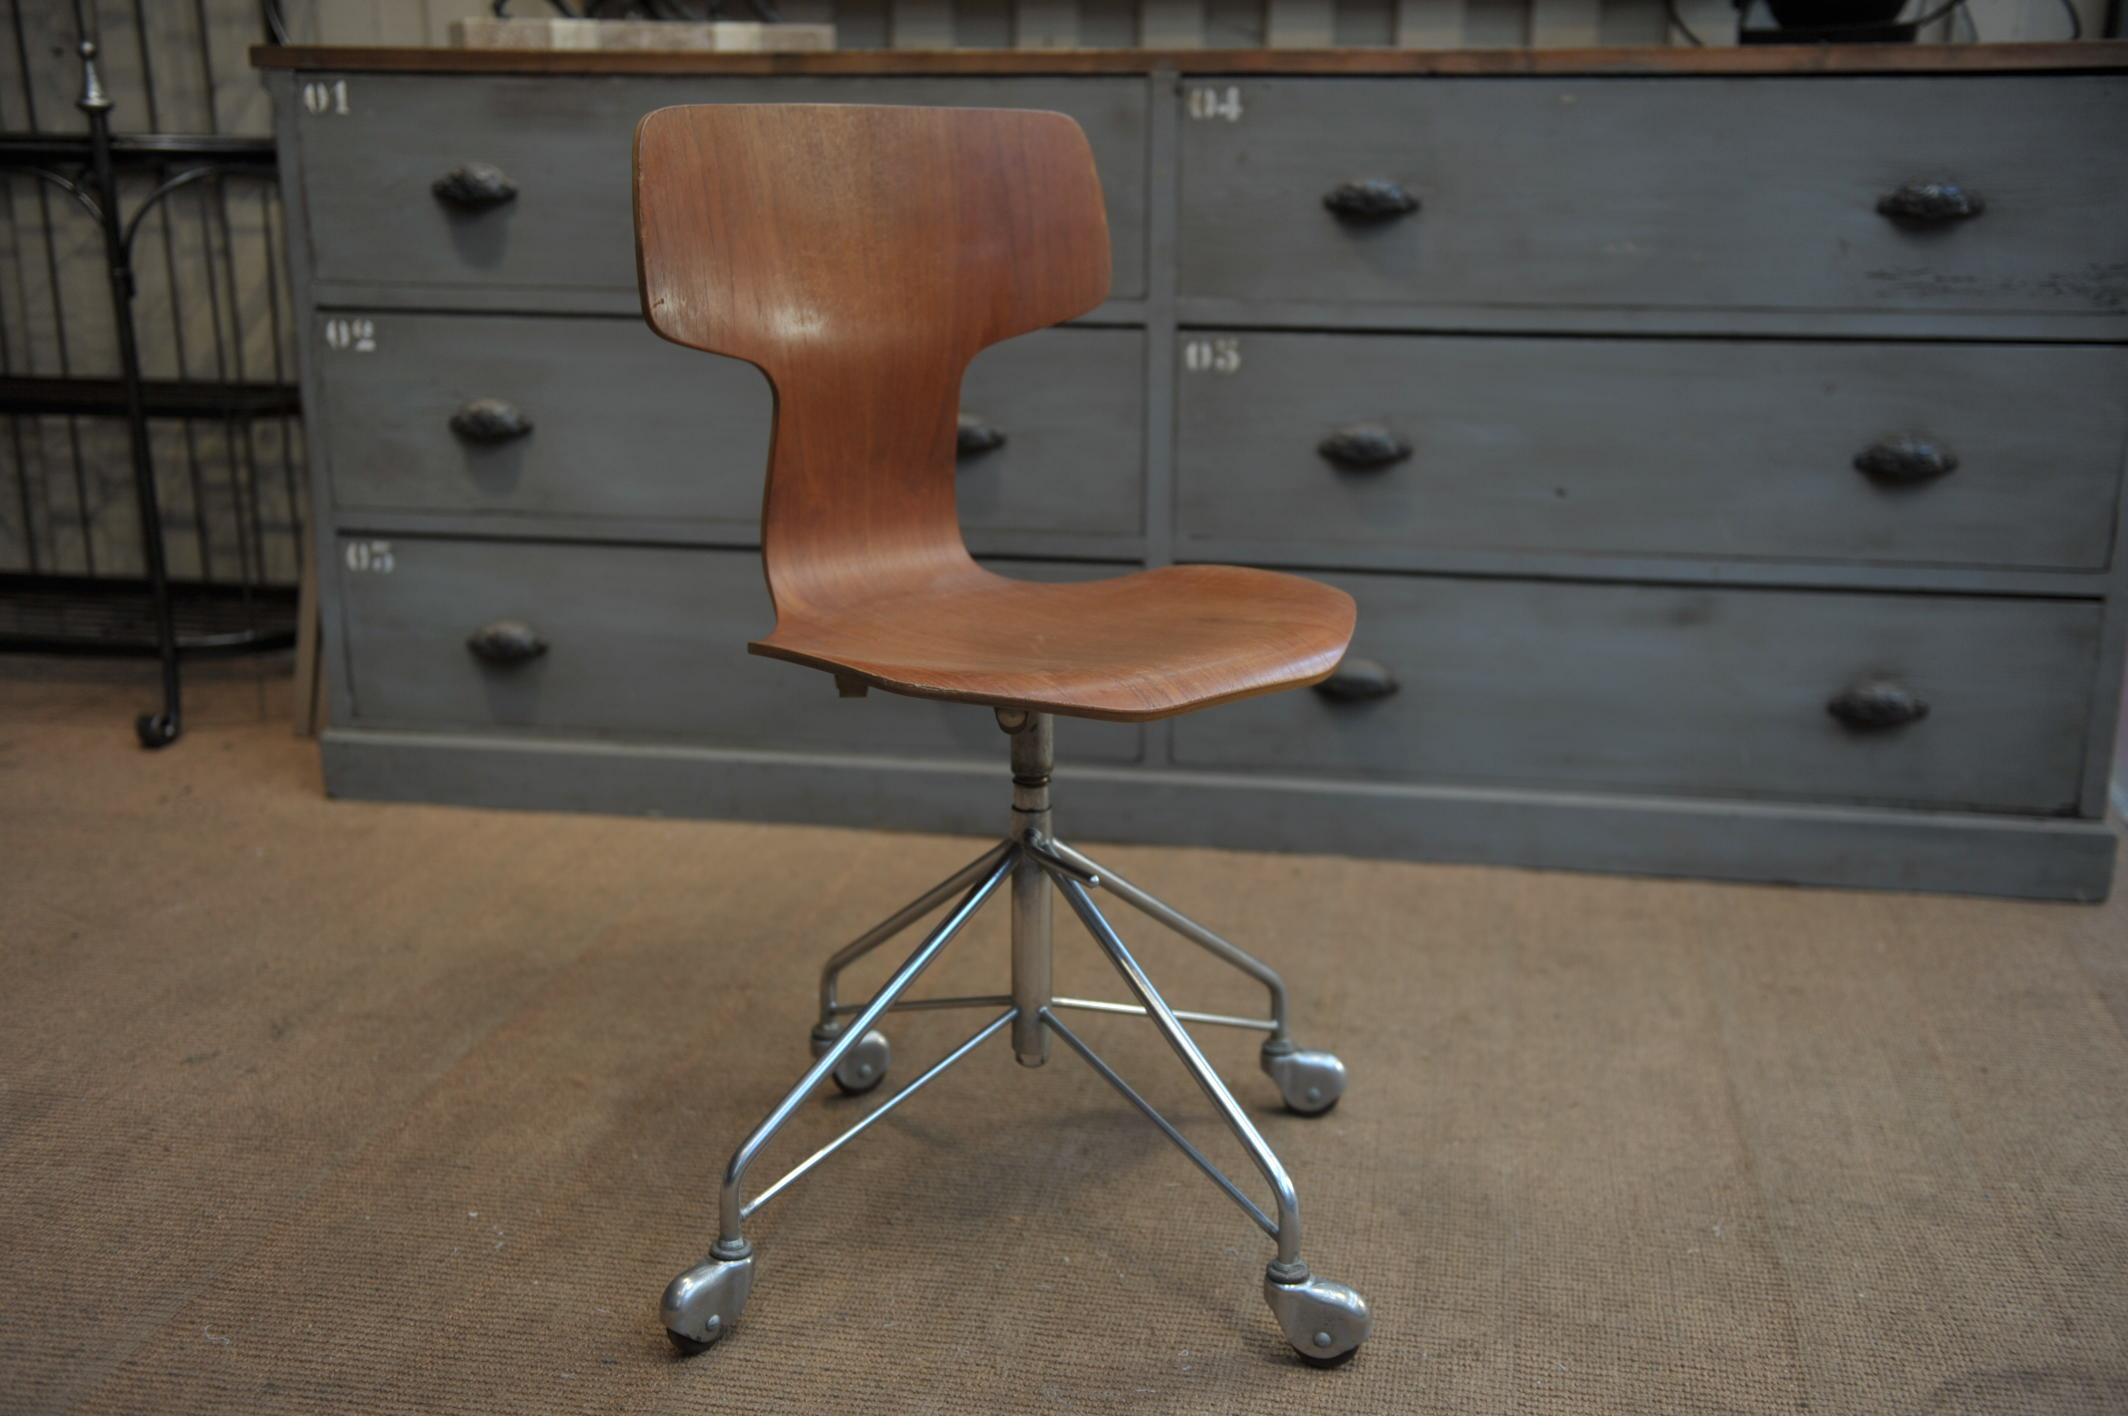 Rare office swivel chair model hammer designer in 1951 by Jacobsen Arne (1902-1951) for Fritz Hansen. Original teak finish and 4 wheels metal base. Height seat adjustable from 45 to 57 cm.